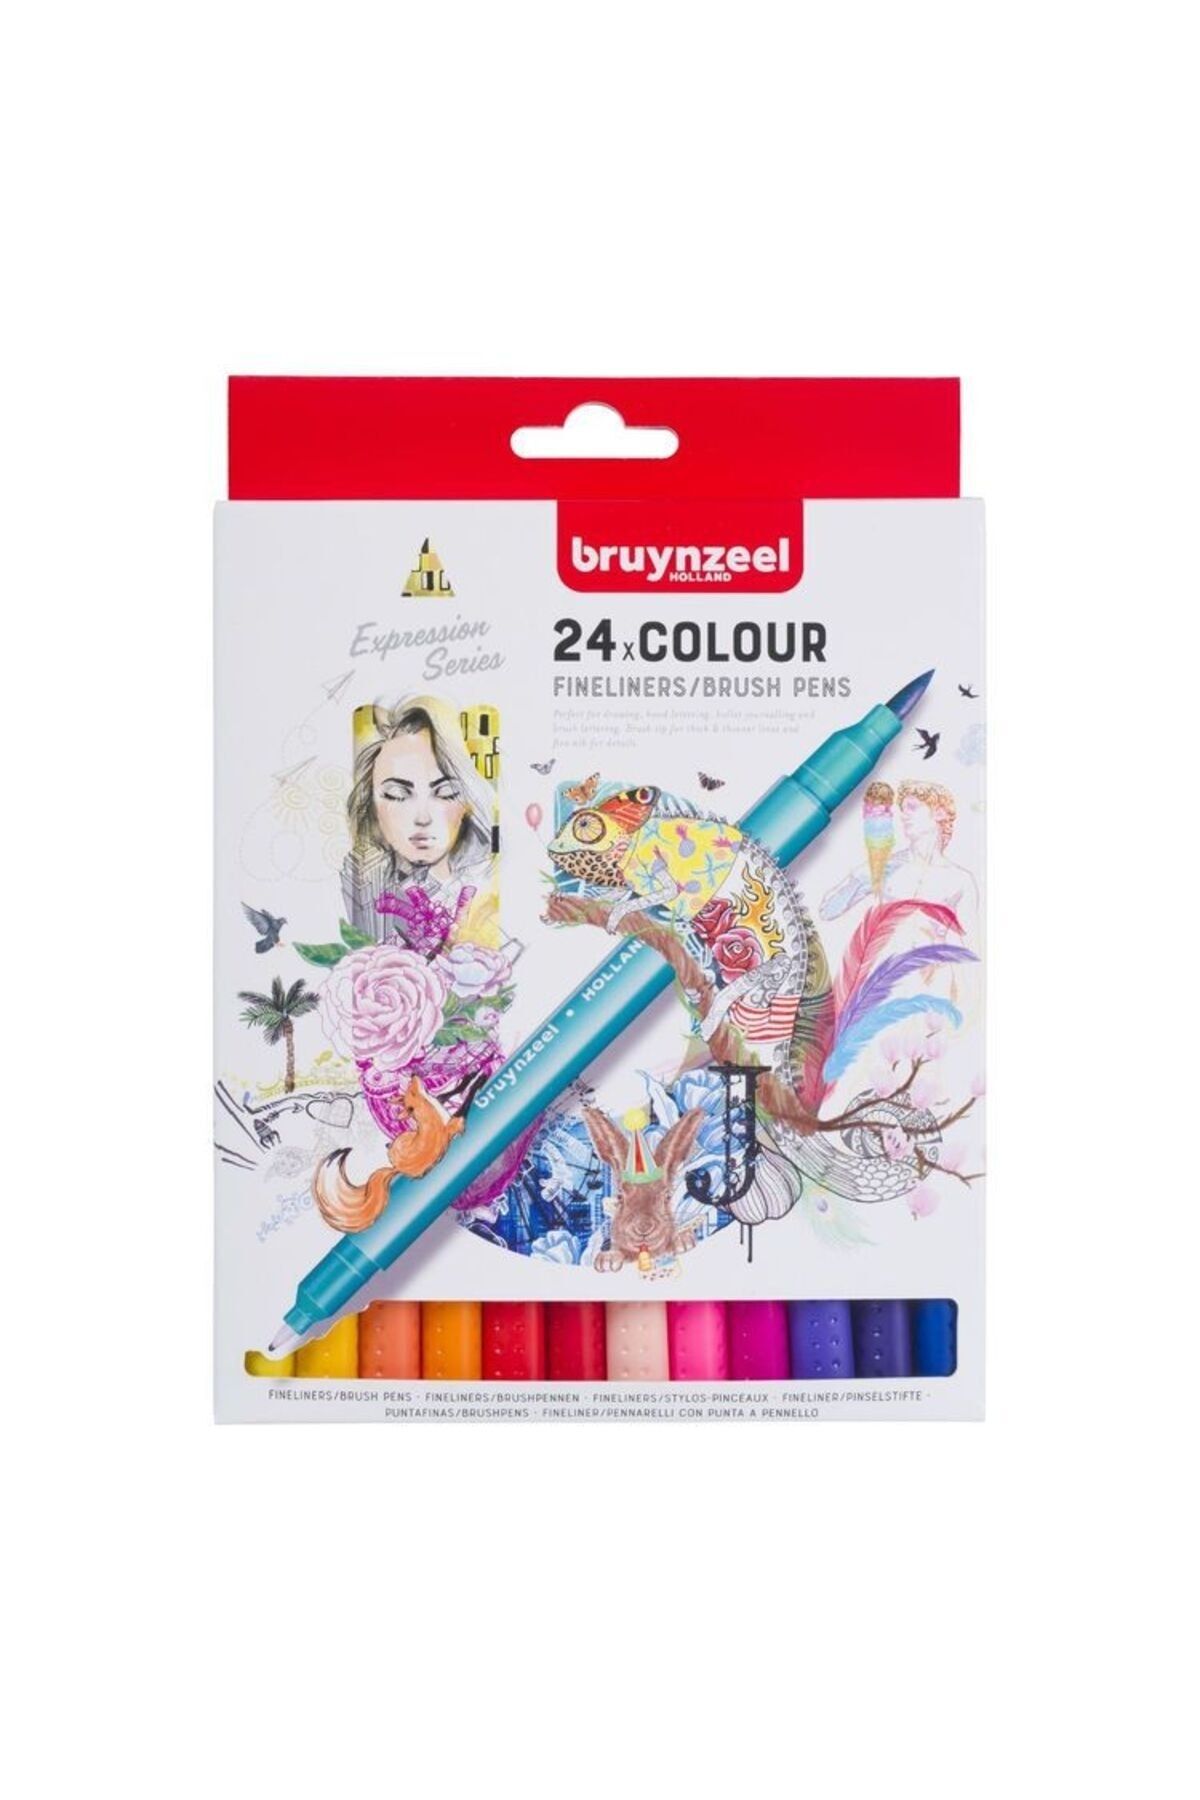 Bruynzeel Fineliner / Brush Pen Çift Taraflı Kalem Seti 24 Renk